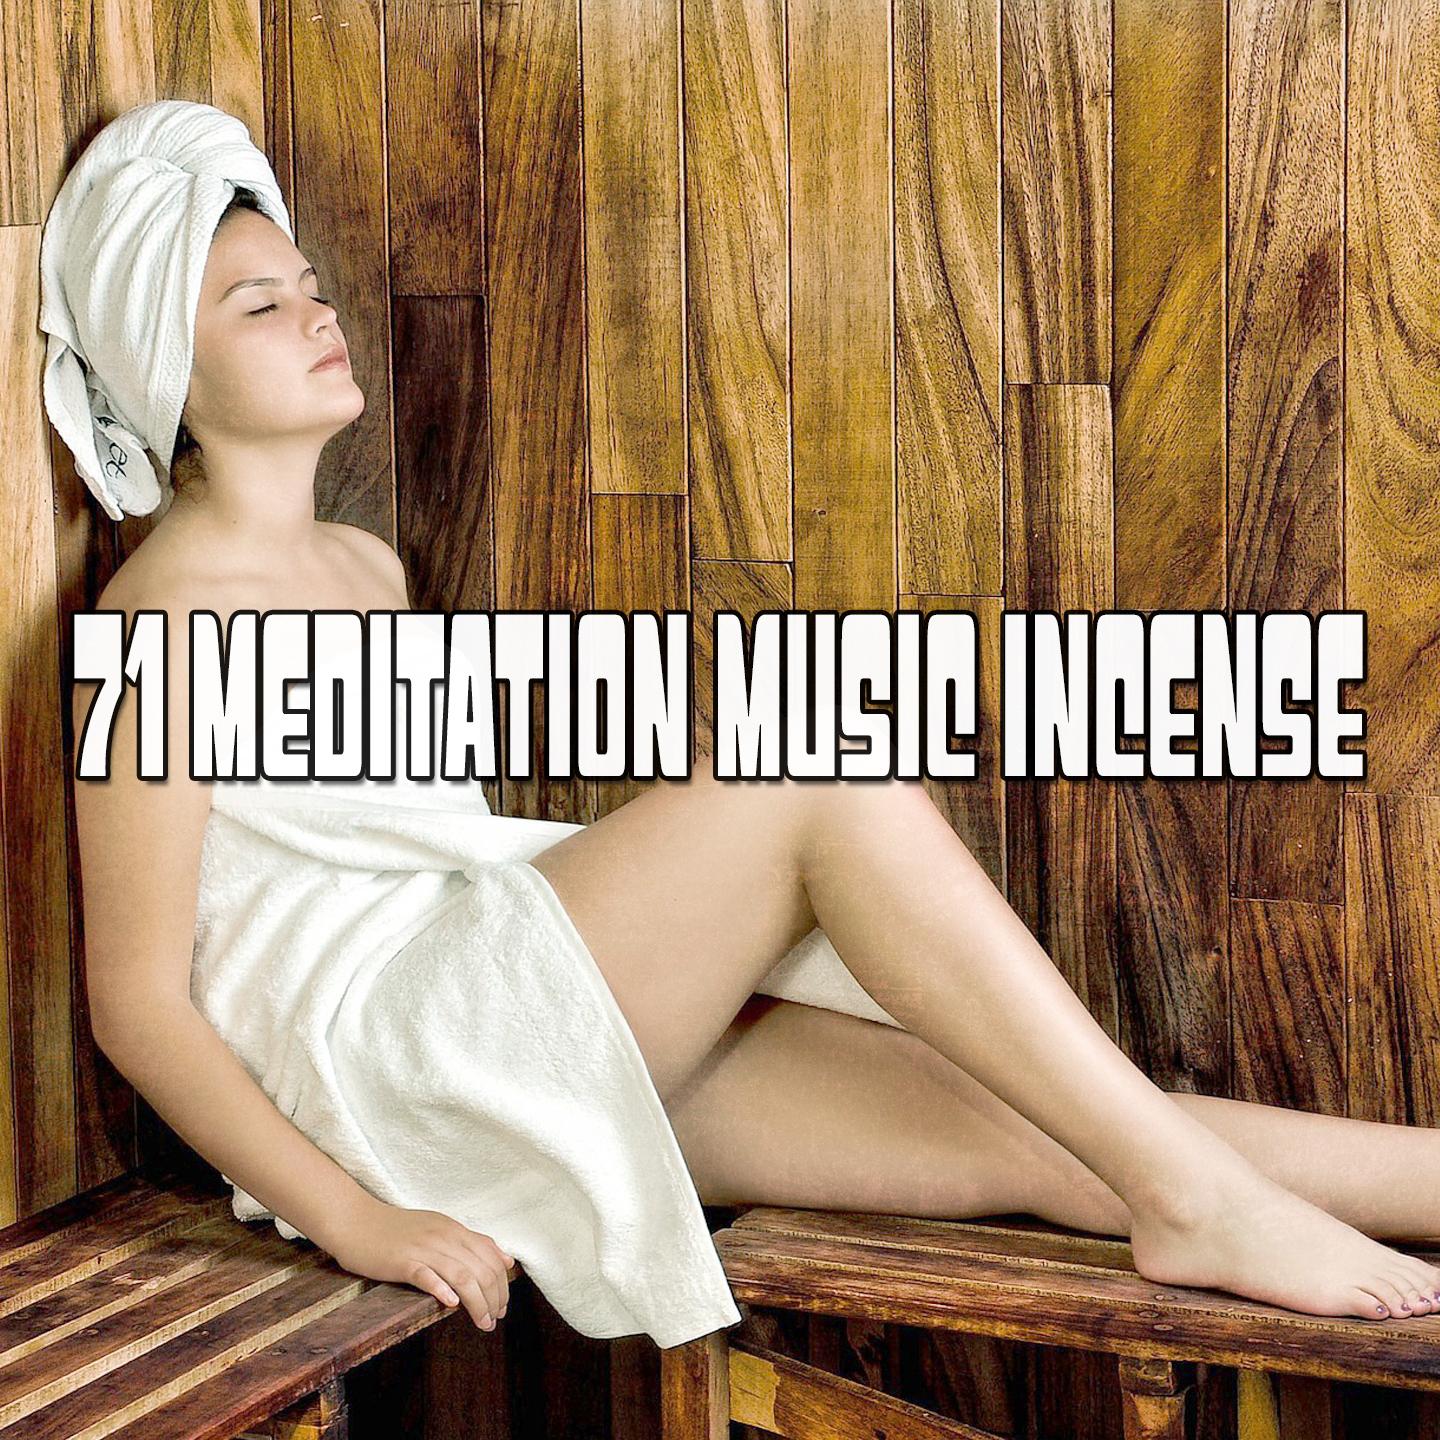 71 Meditation Music Incense